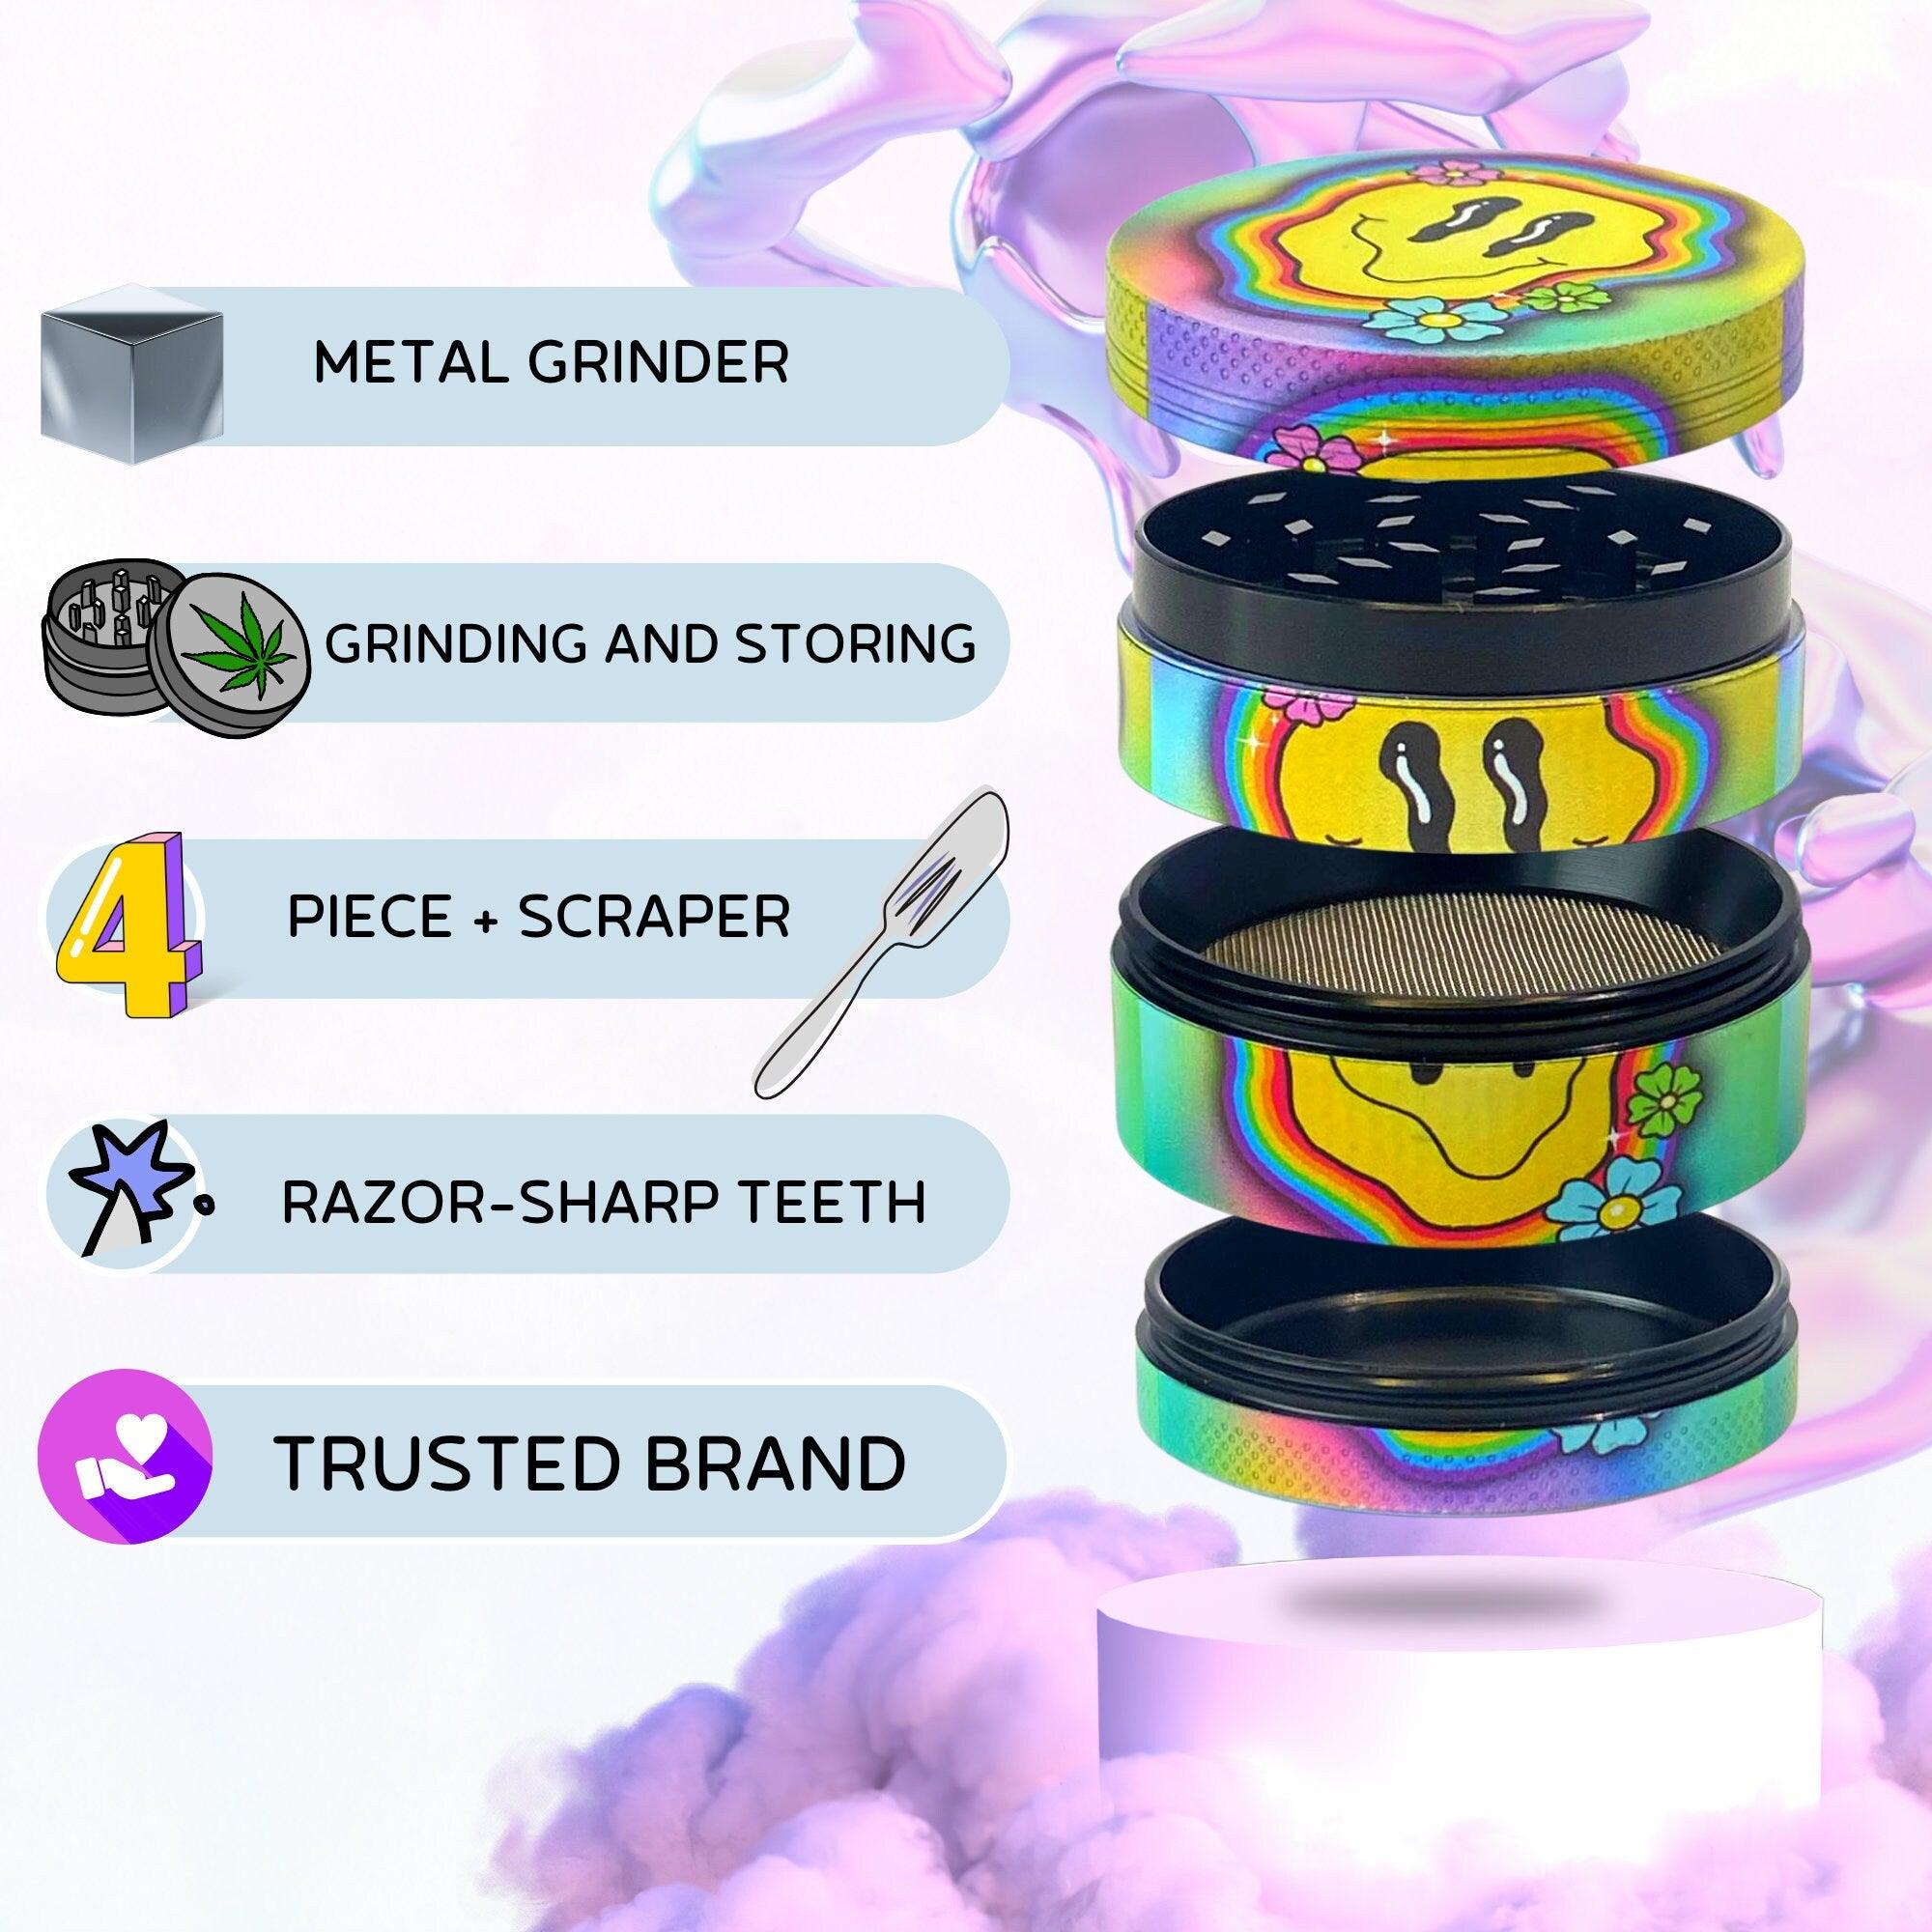 Trippy Emoji Grinder | Weird cannabis grinders, weed accessories, 4 piece grinder, metal grinder, Psychedelic Grinder, Trippy Smile Grinder